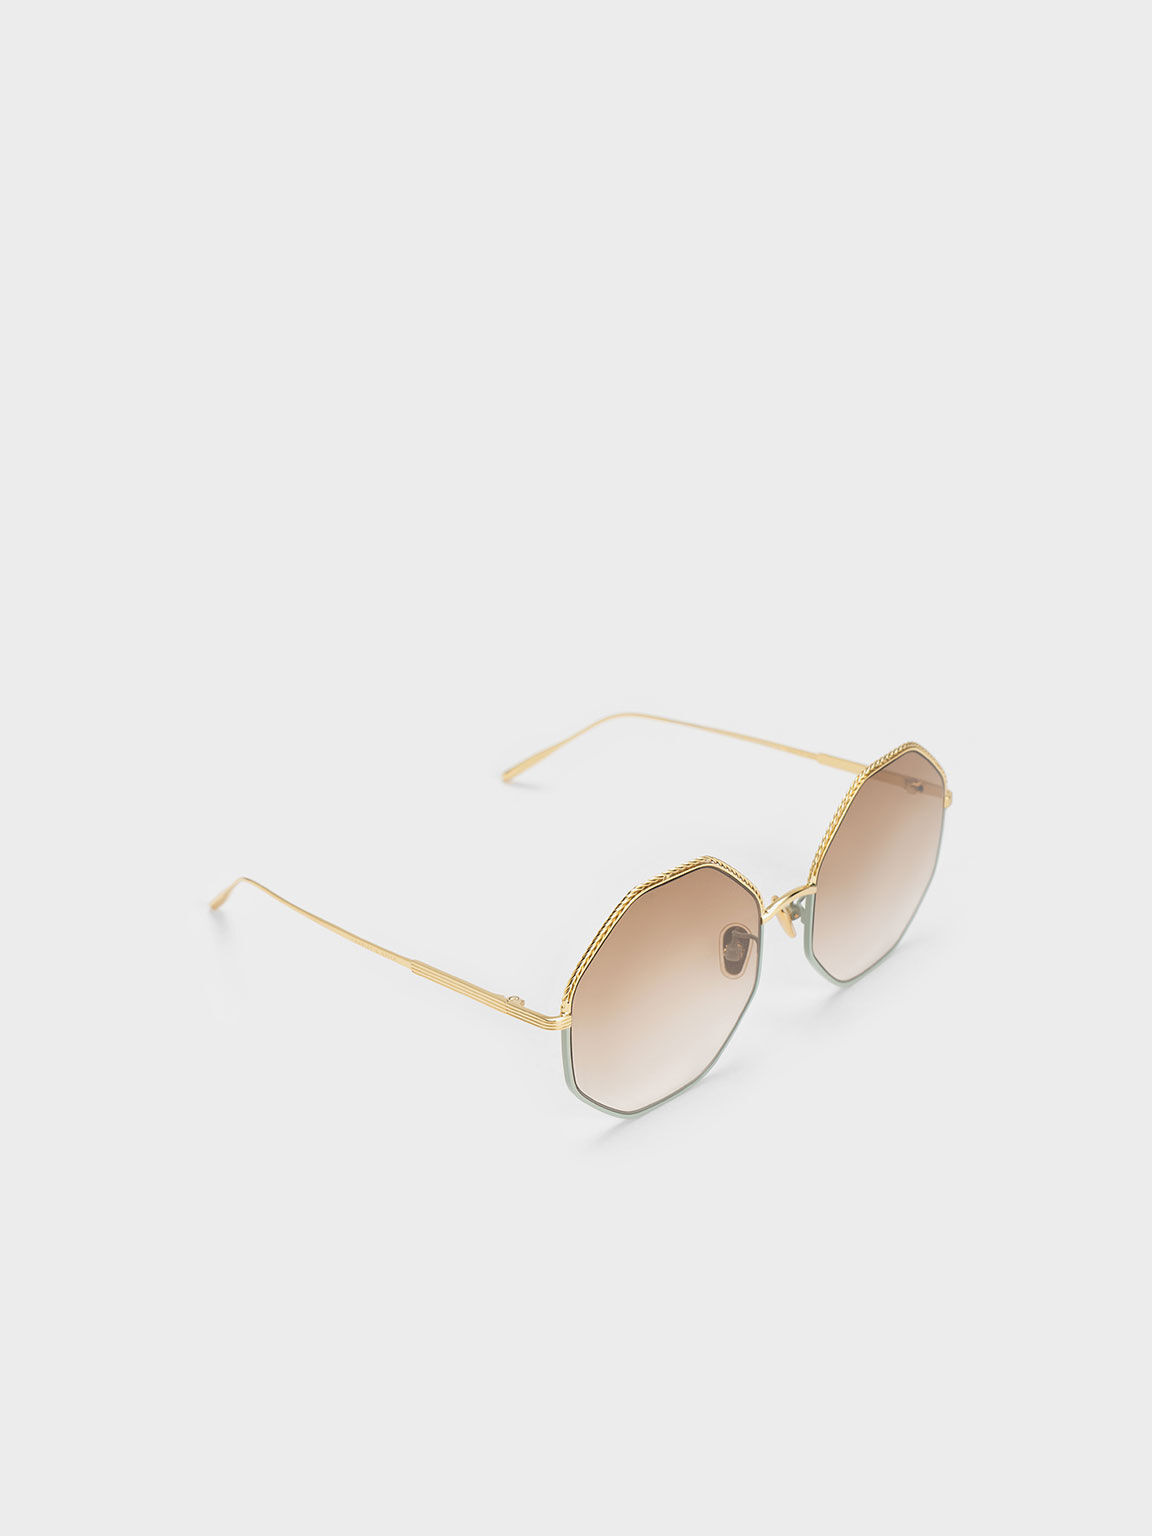 Hexagonal Wire-Frame Sunglasses, Mint Green, hi-res